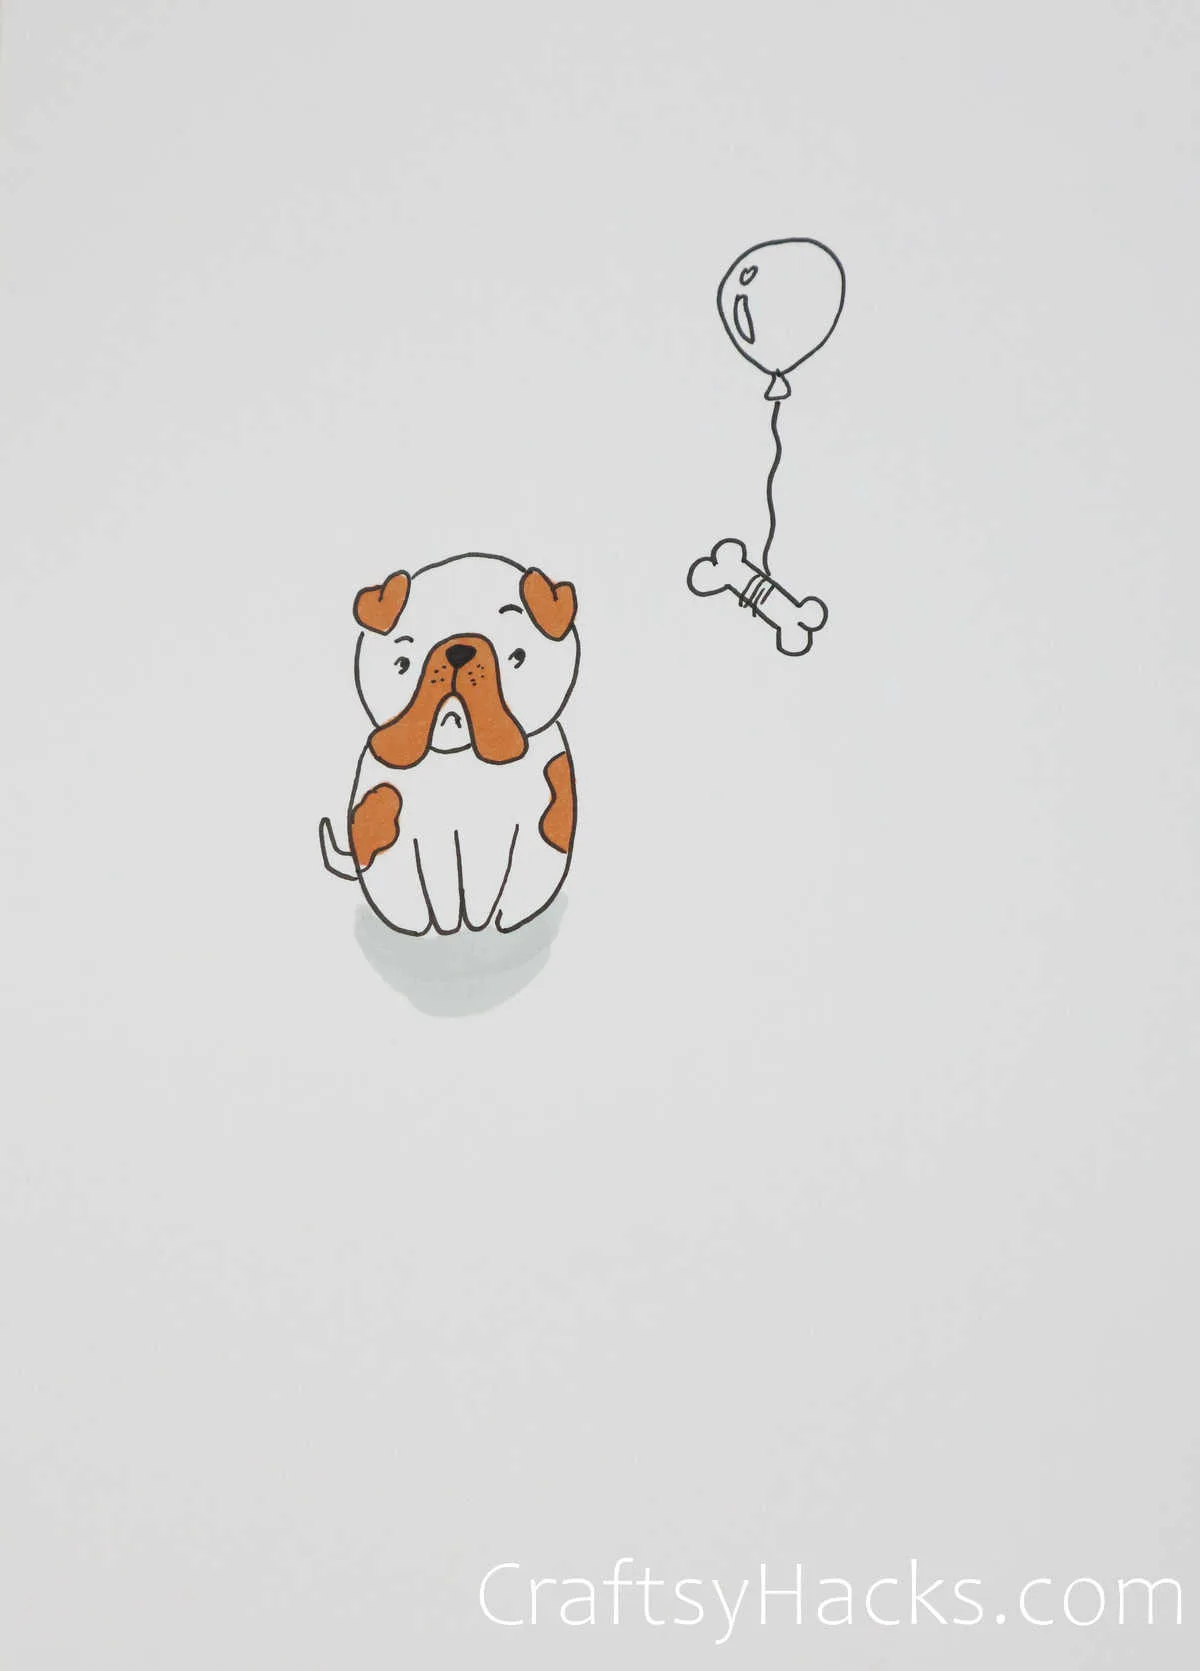 Buddy the dog, his bone and balloon